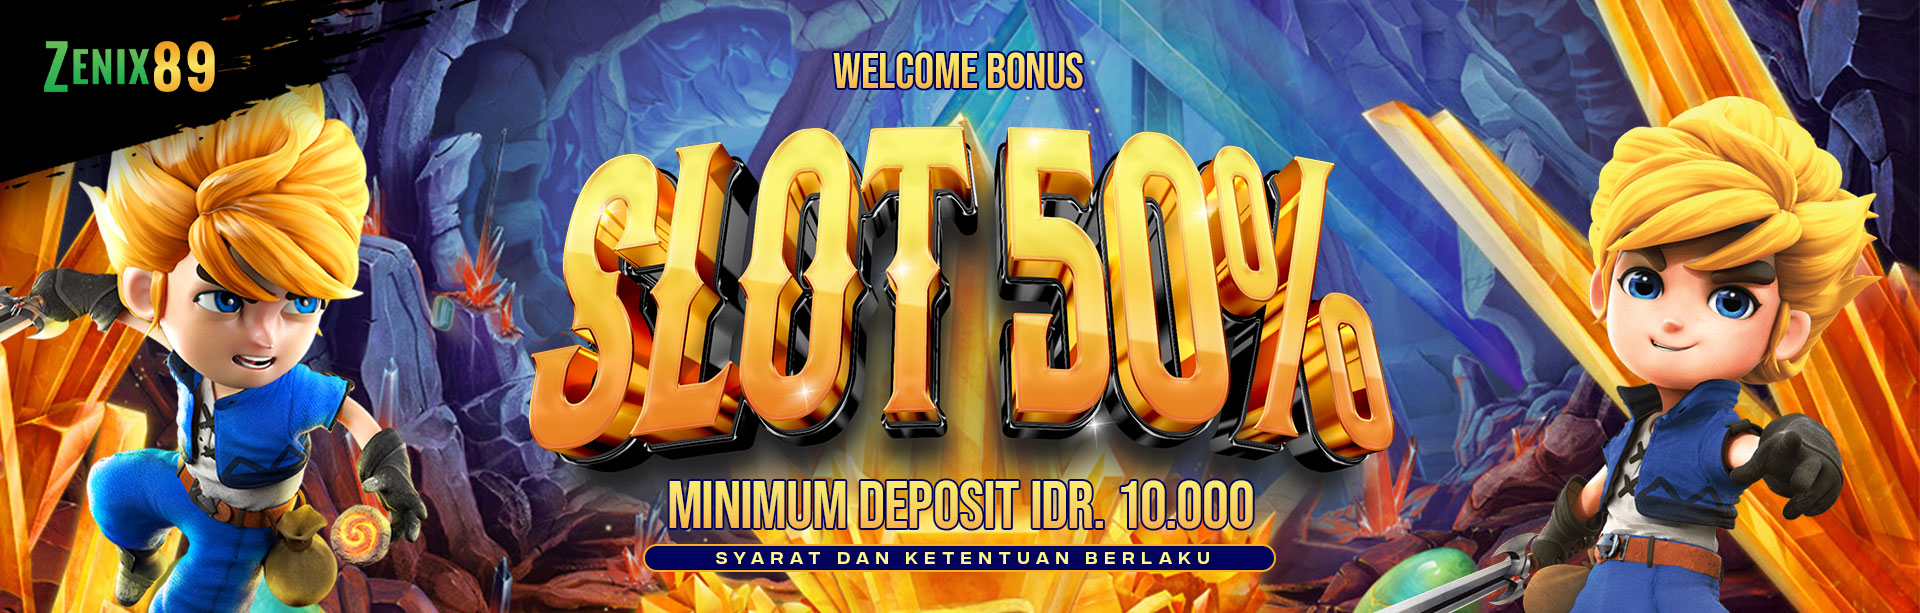 Welcome Bonus Slot 50% !!!